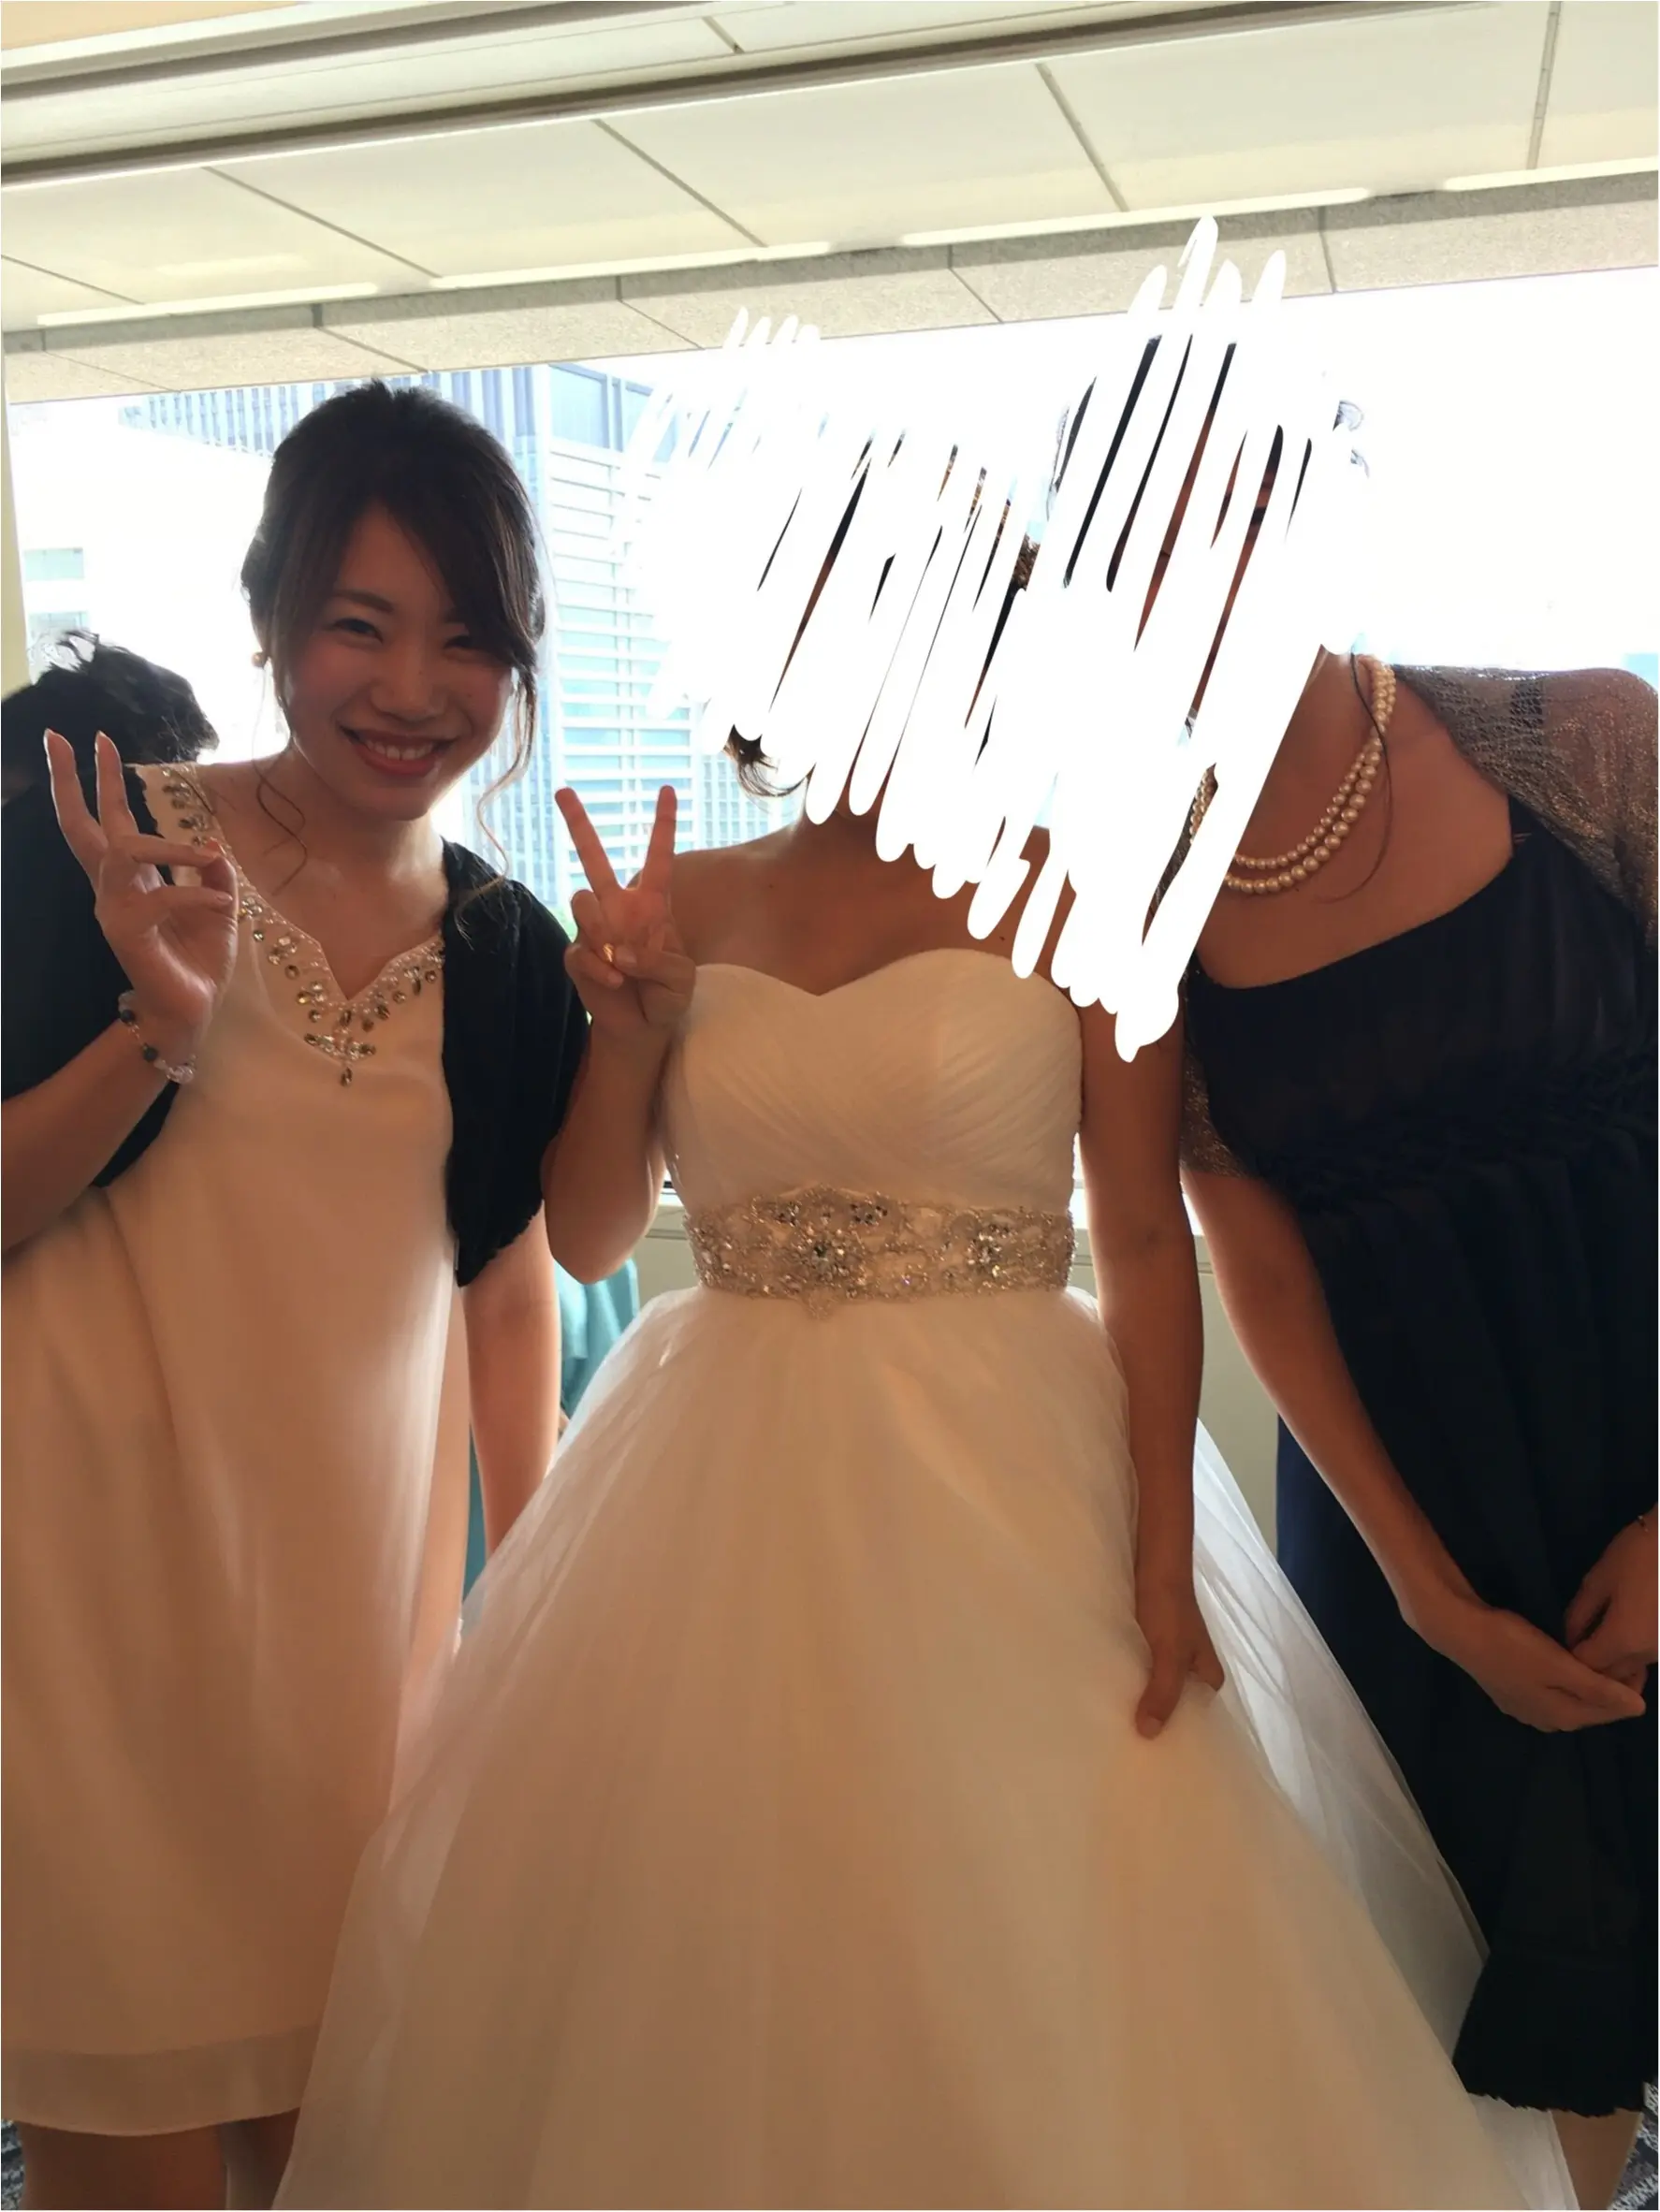 Kkrホテル東京で結婚式 Moreインフルエンサーズブログ Daily More